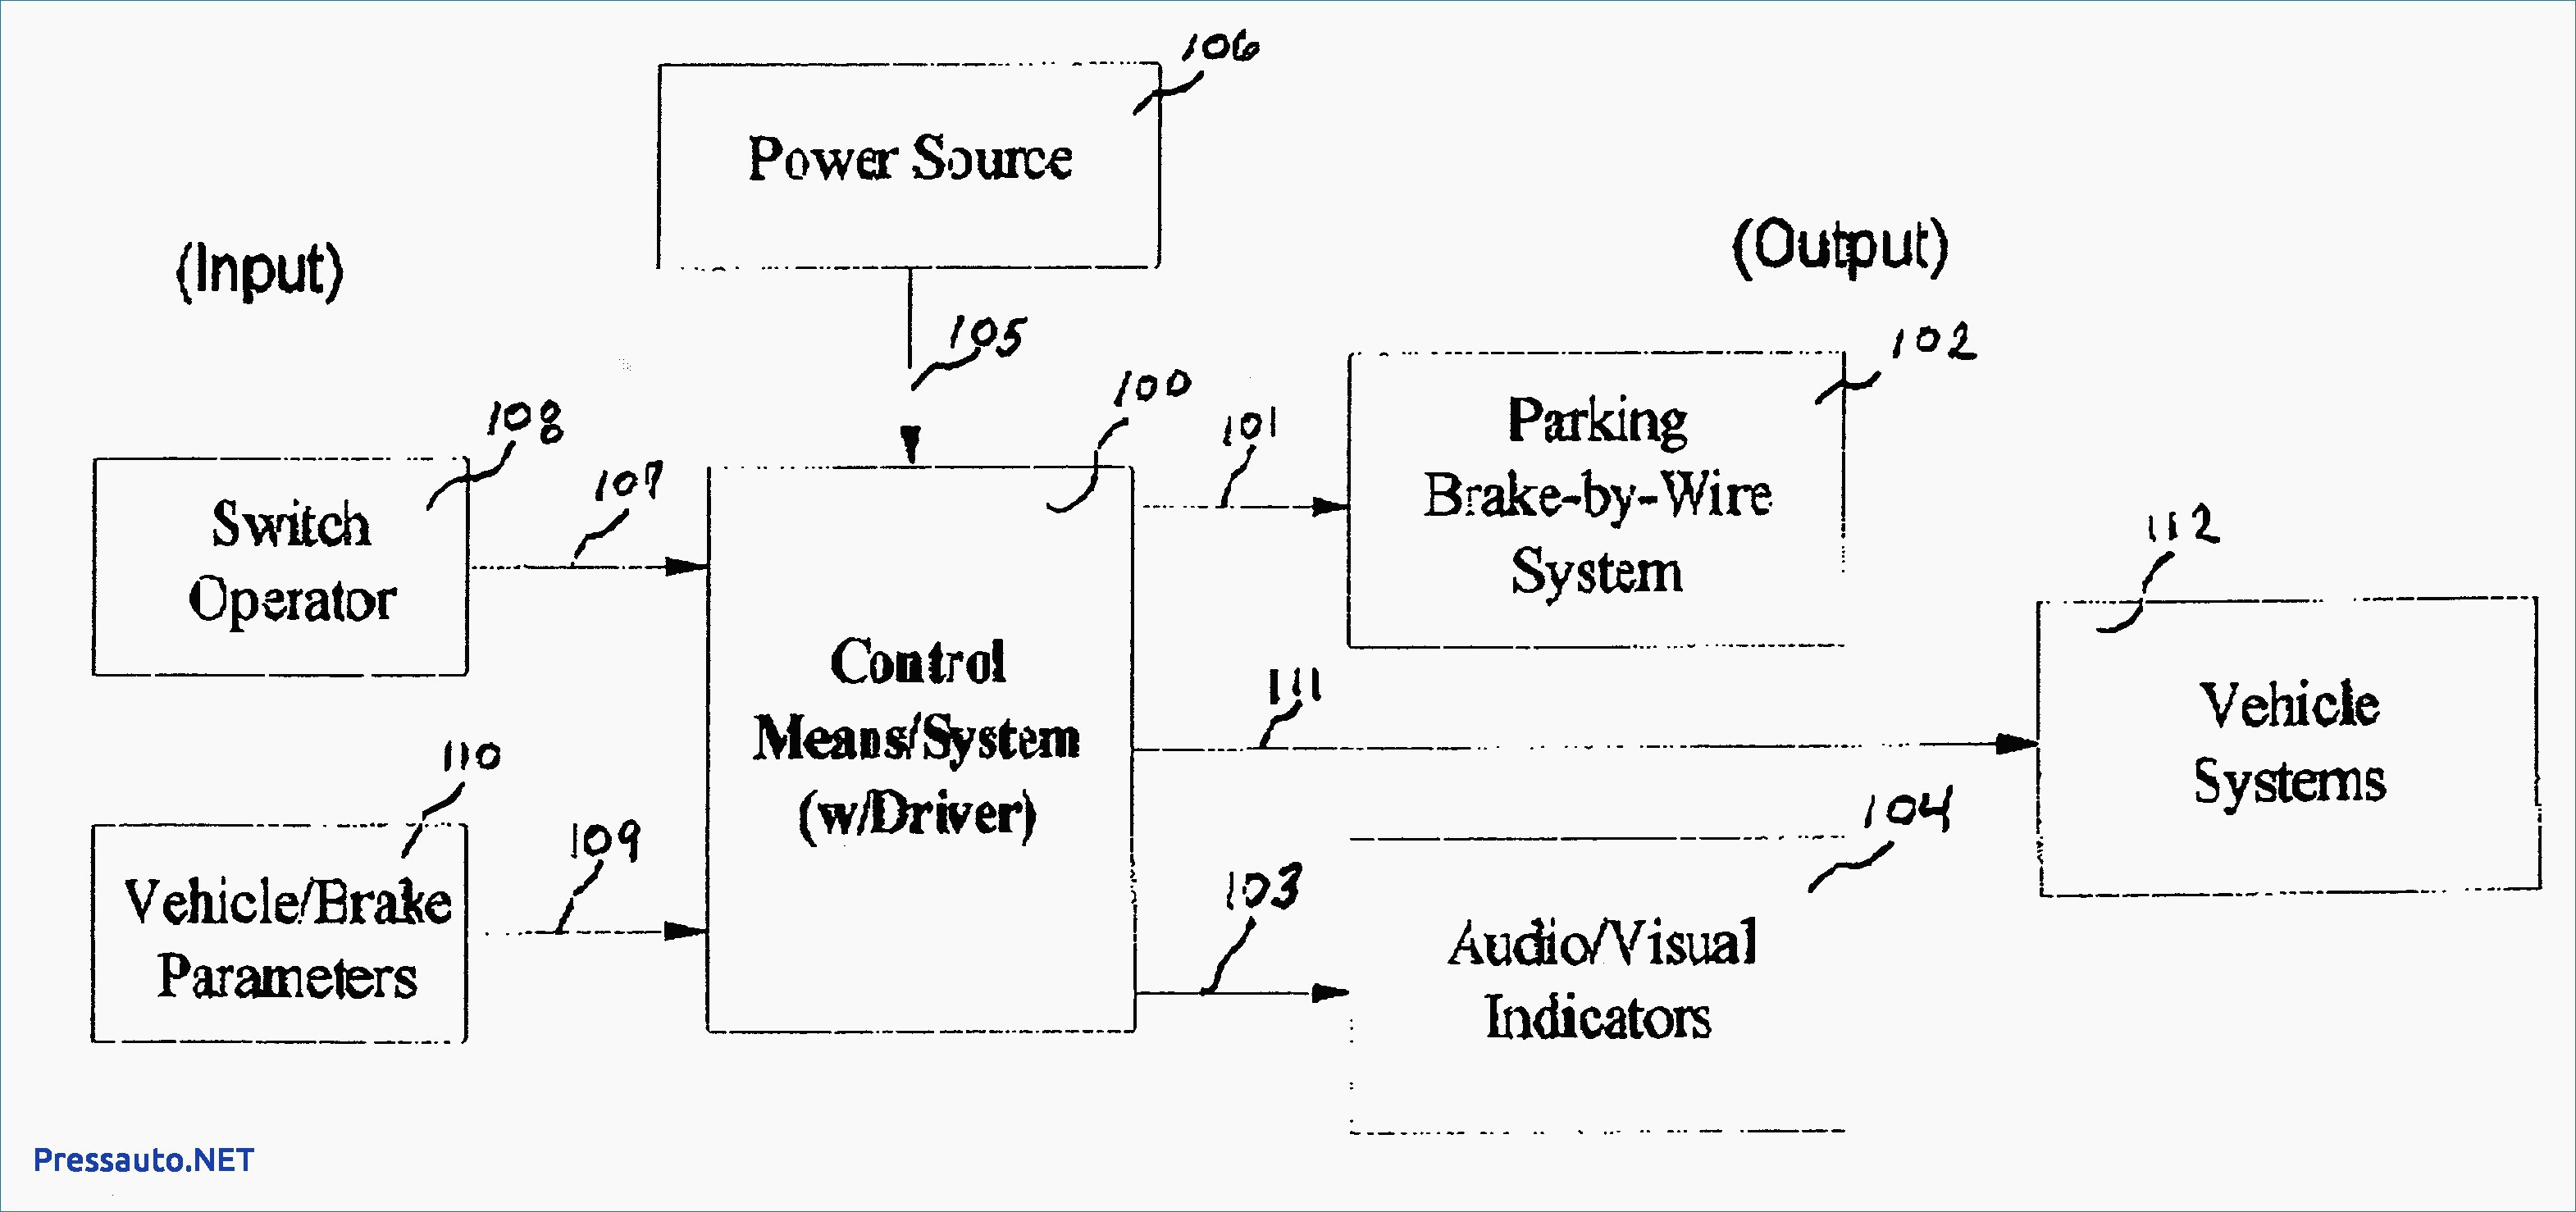 insta trim wiring diagram insta circuit diagrams wire center u2022 rh velloapp co